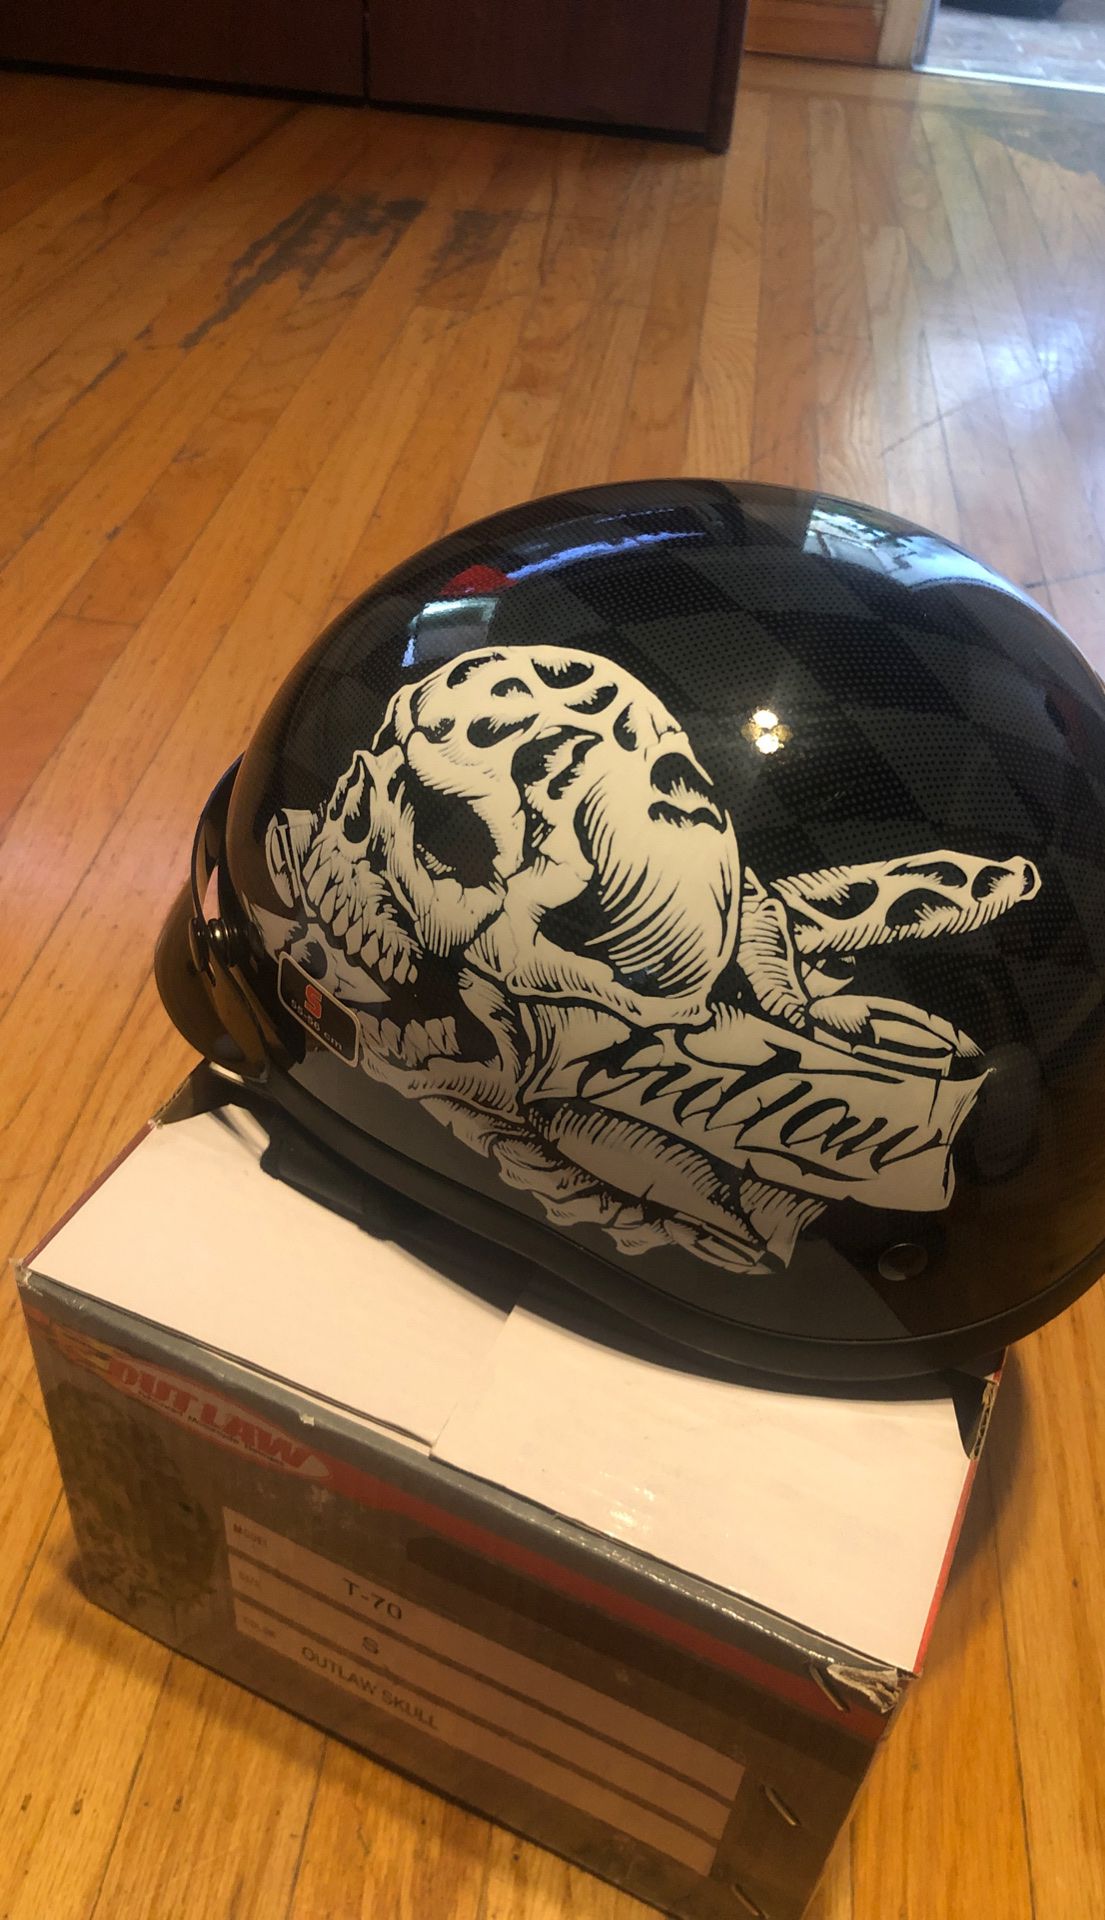 Brand new Dot motorcycle helmet / casco de moto nuevo